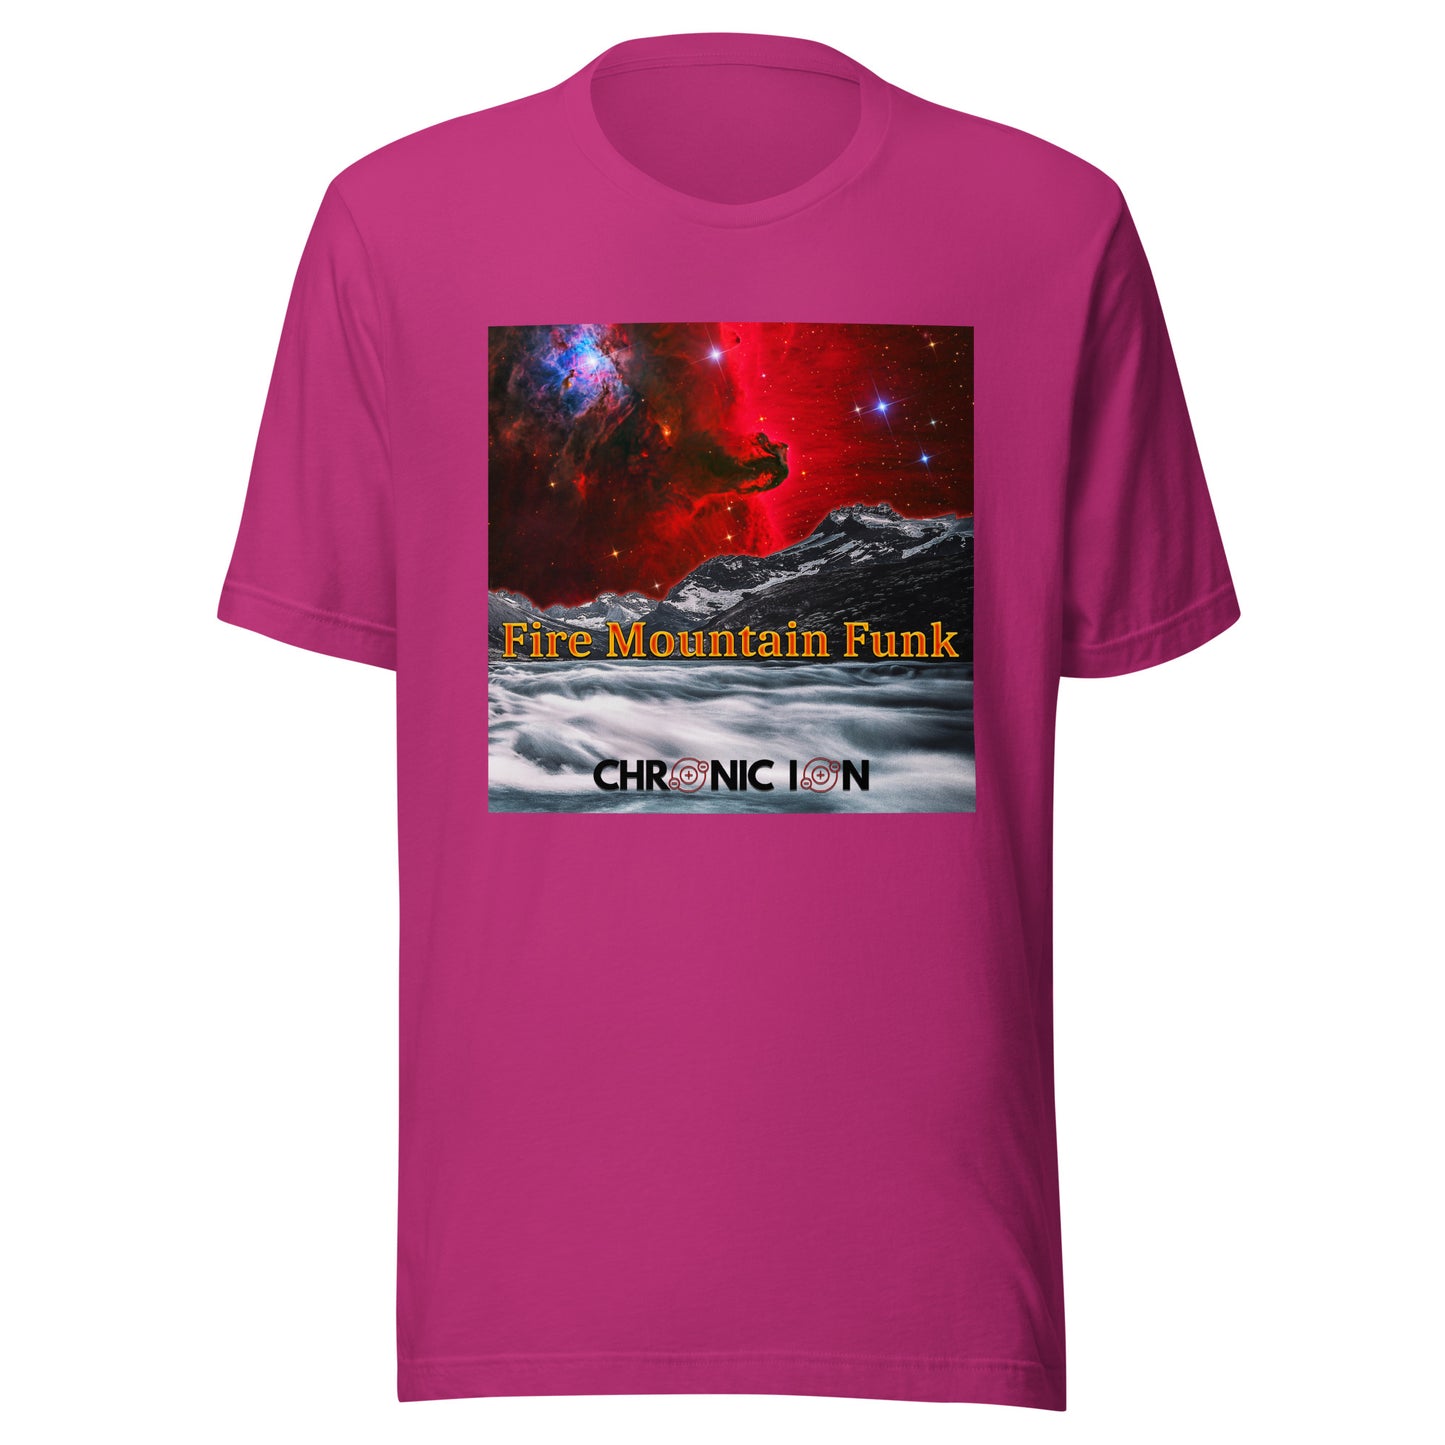 Chronic Ion - Fire Mountain Funk T-Shirt